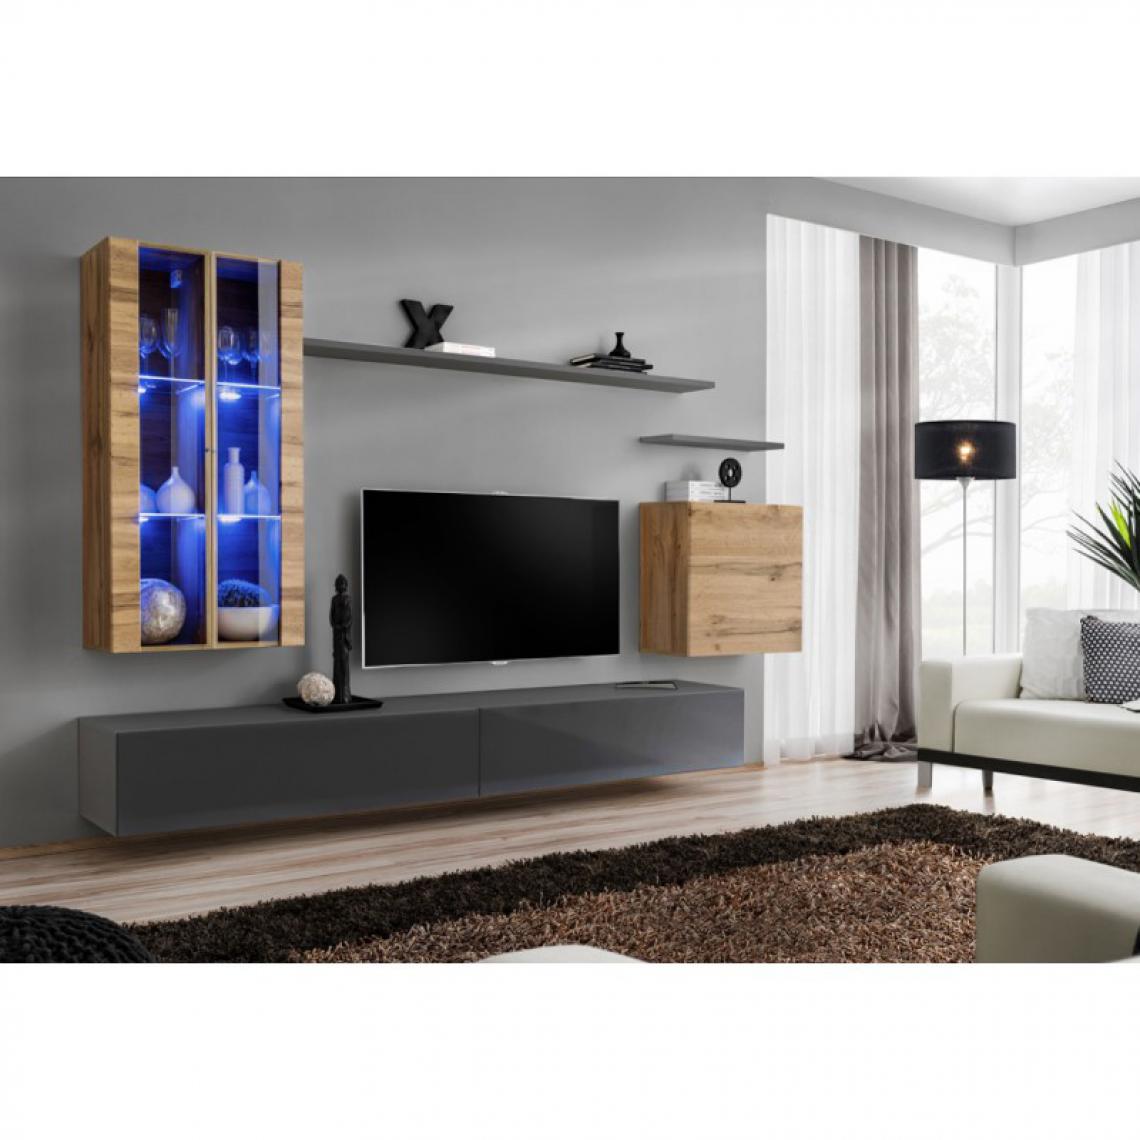 Ac-Deco - Meuble TV Mural Design Switch XII 270cm Naturel & Gris - Meubles TV, Hi-Fi